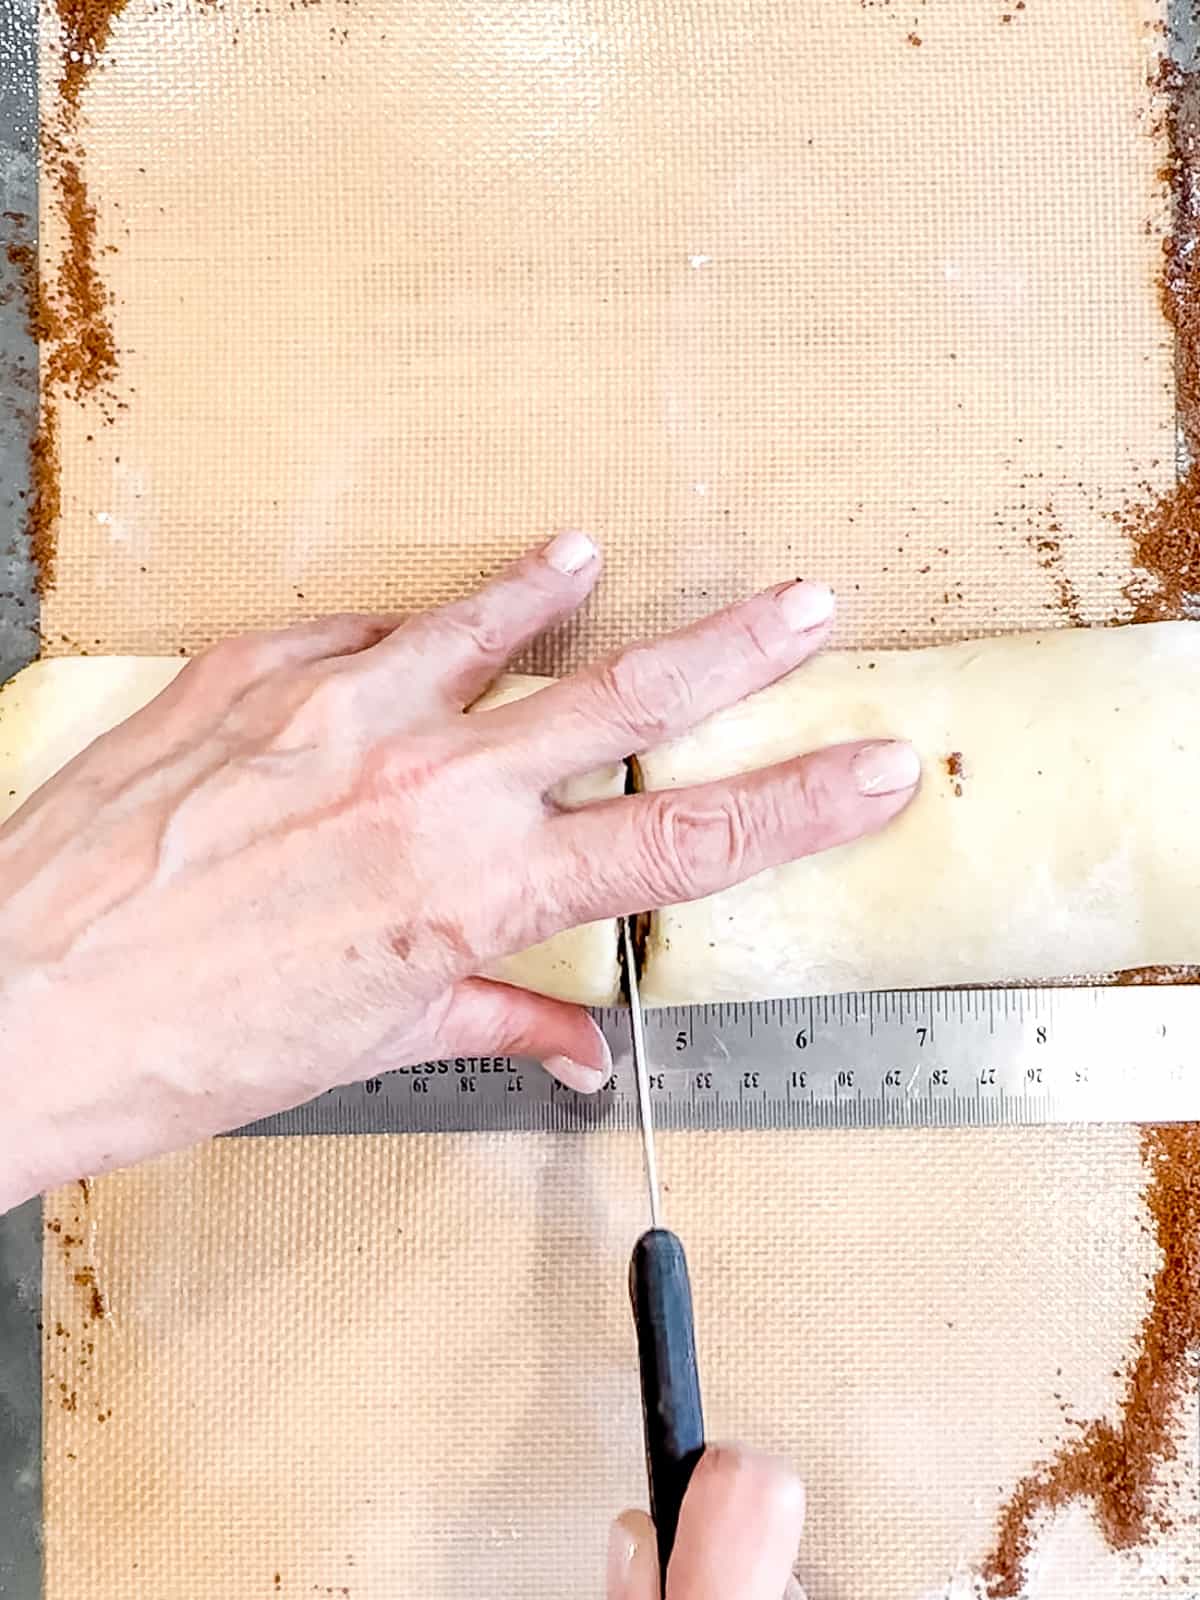 Slicing a log of cinnamon roll dough.